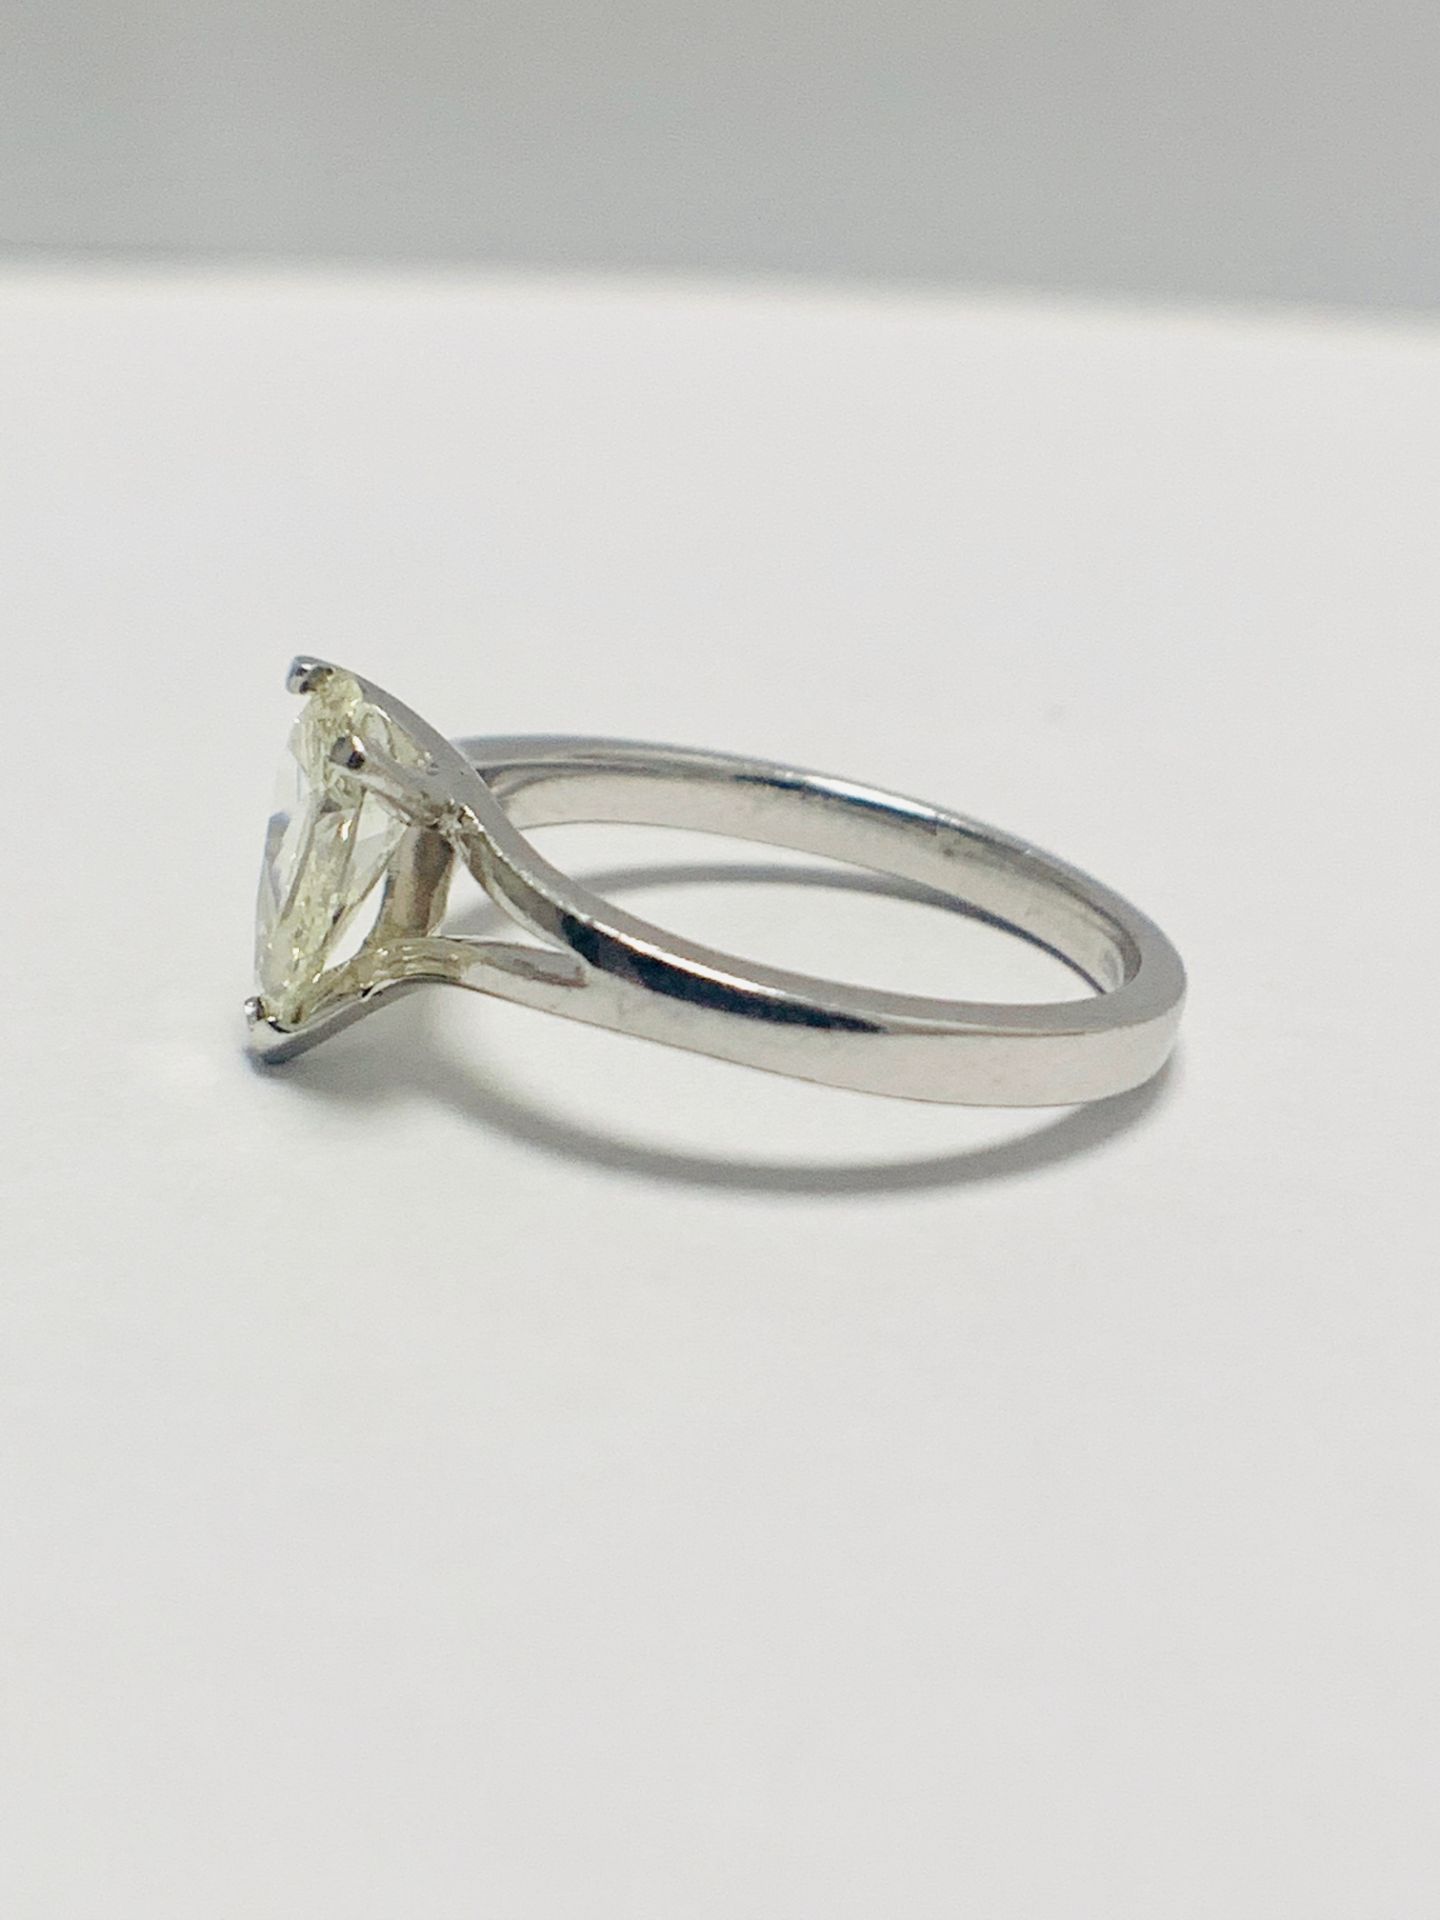 1Ct Pearshape Diamond Platinum Solitaire Ring. - Image 3 of 9